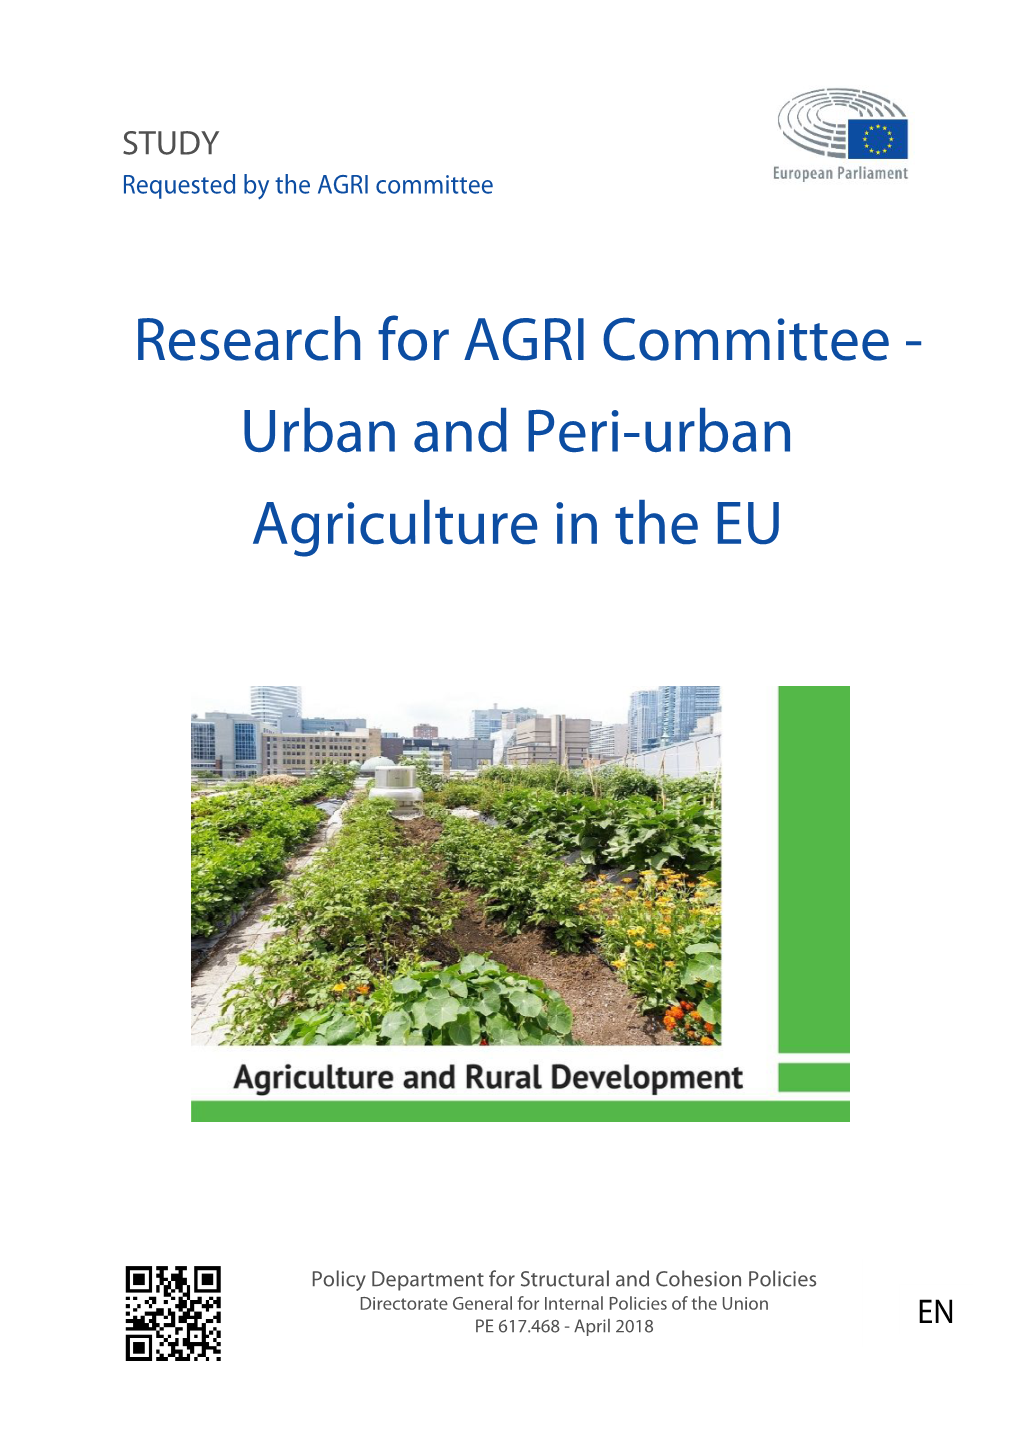 Urban and Peri-Urban Agriculture in the EU